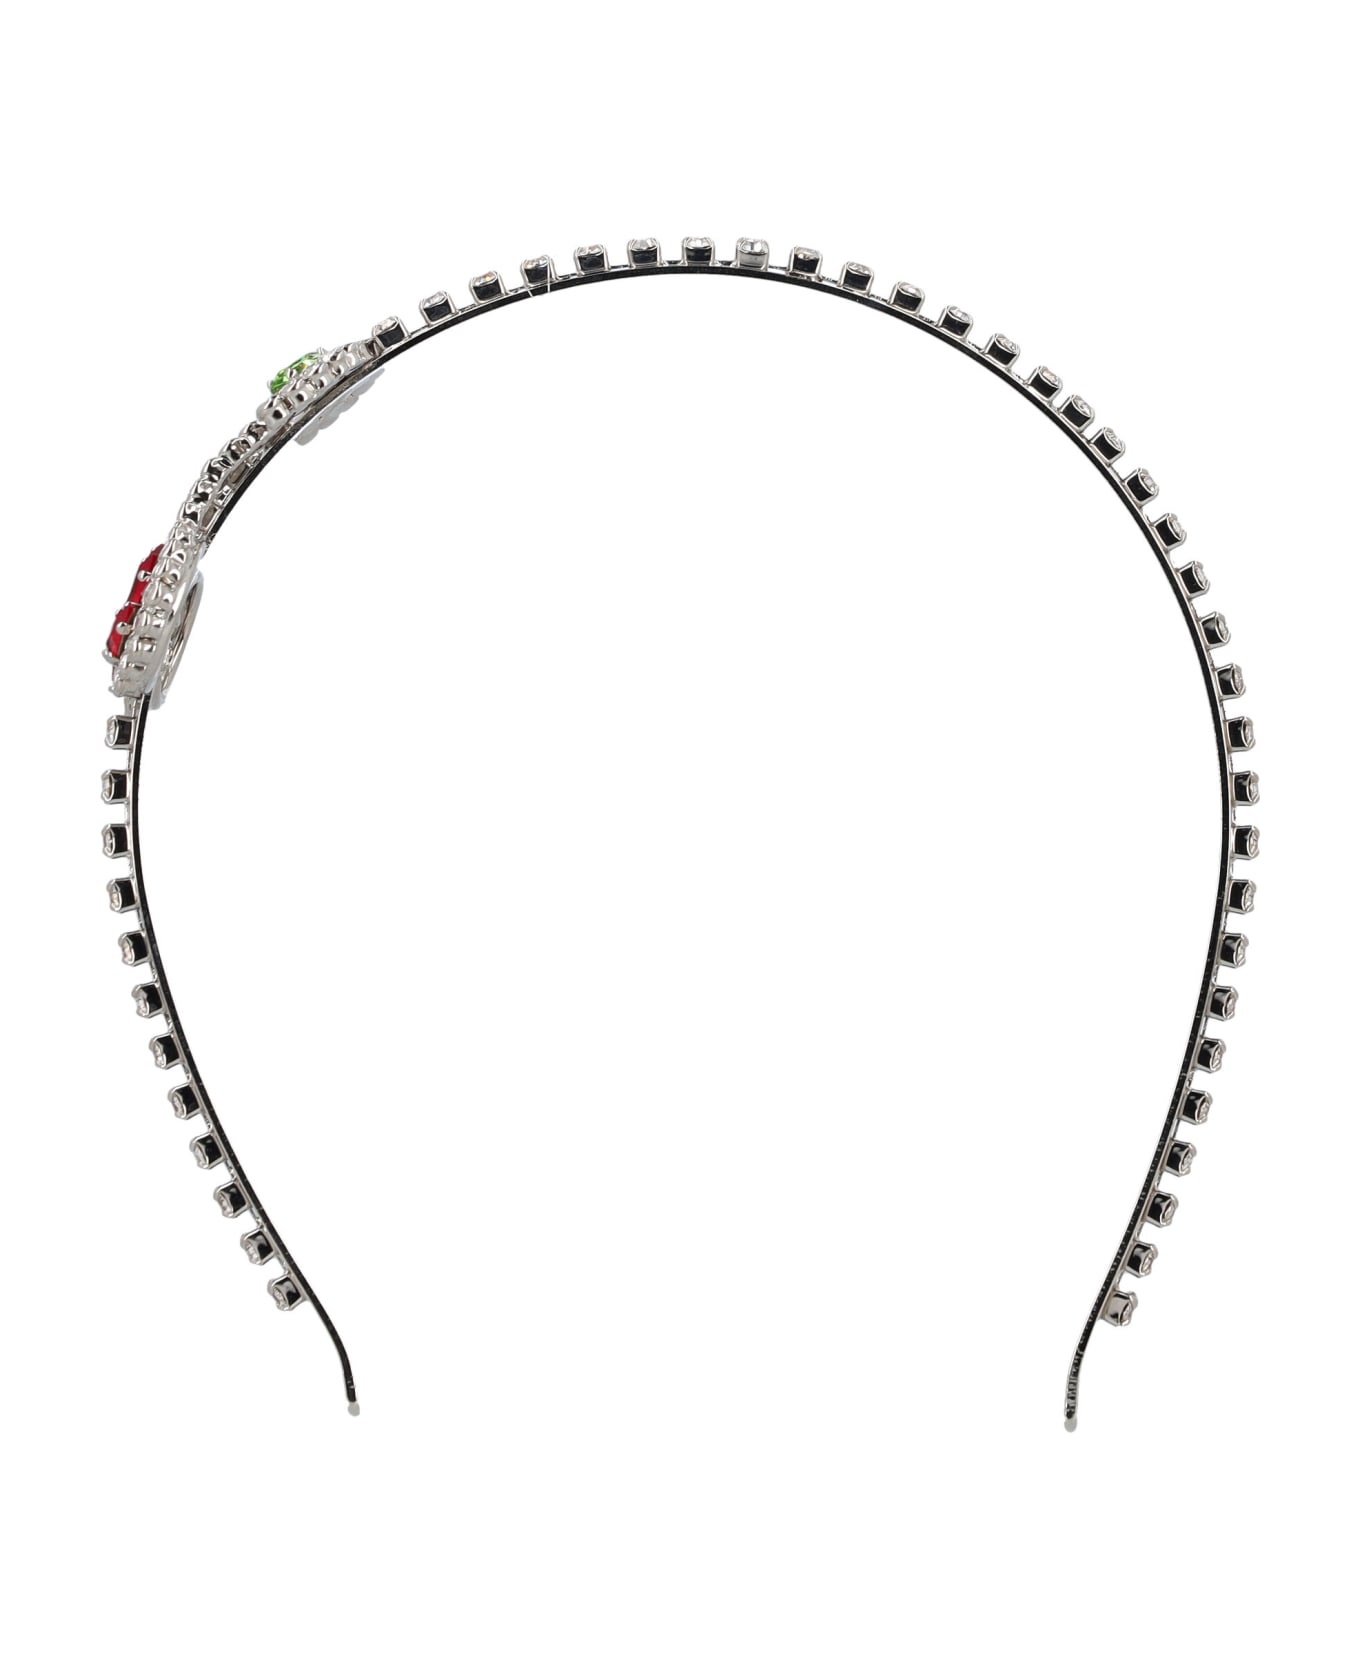 Alessandra Rich Crystal Headband With Cherry Embellishment - CRYSTAL SILVER